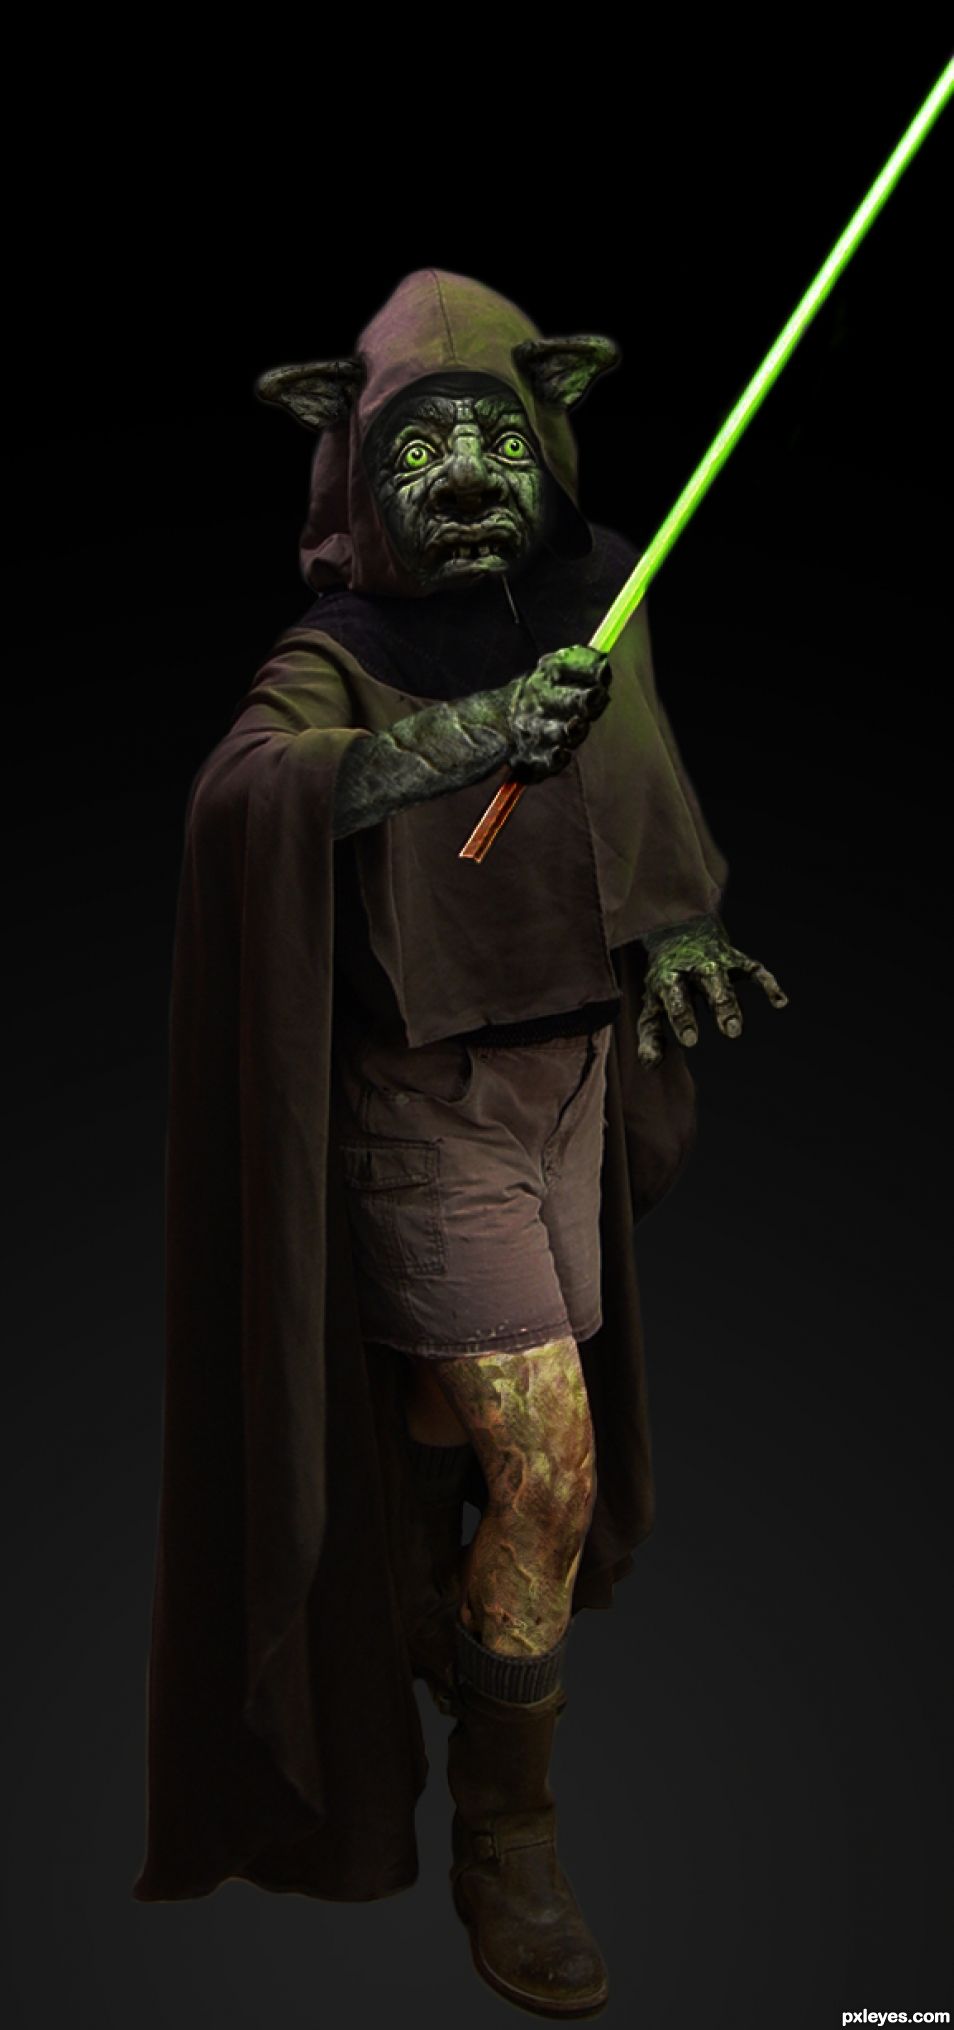 Jedi 